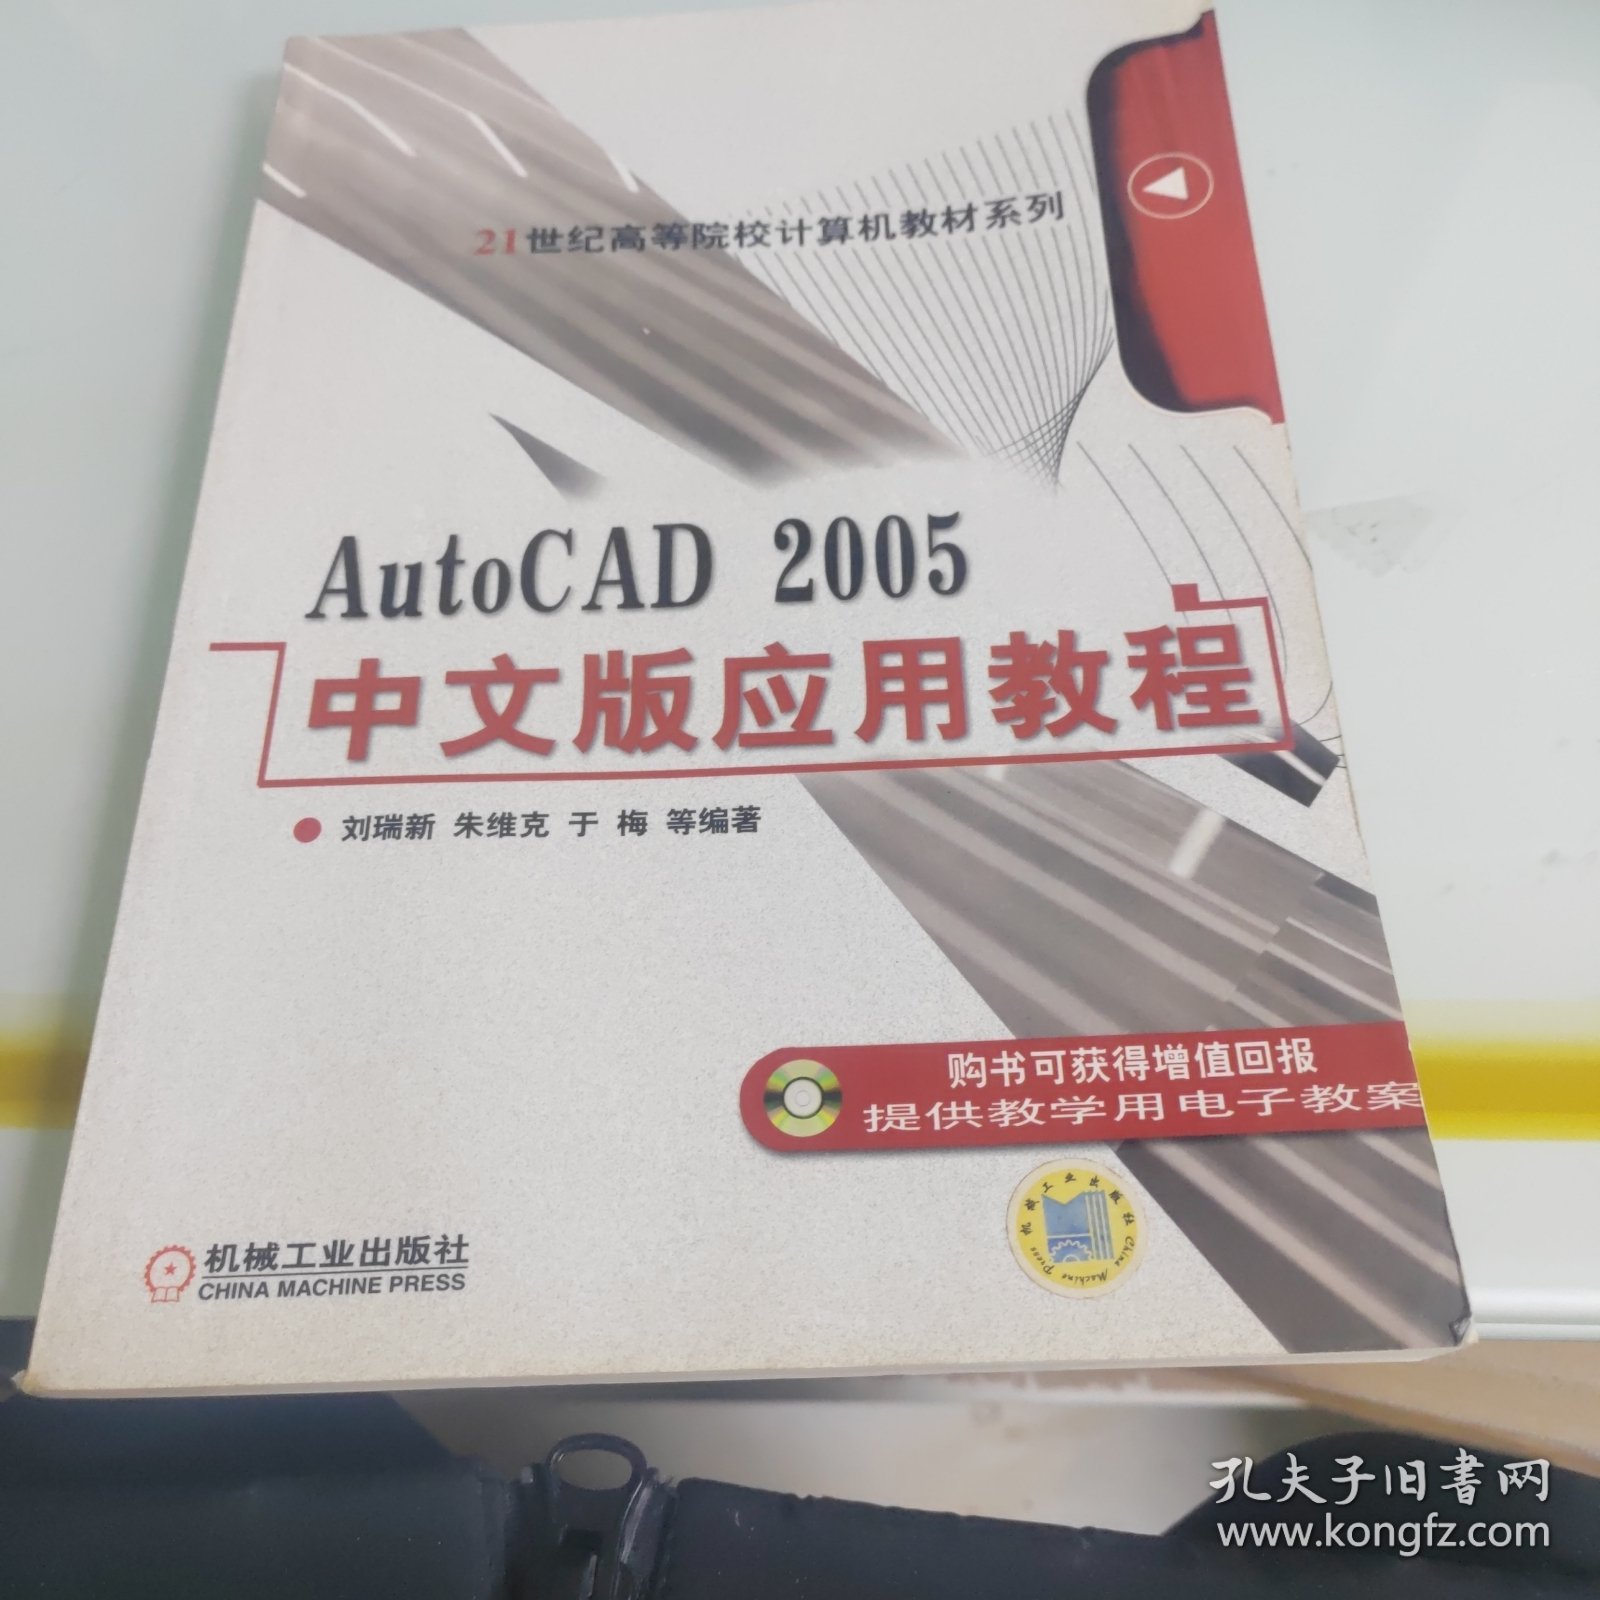 AutoCAD 2005中文版应用教程